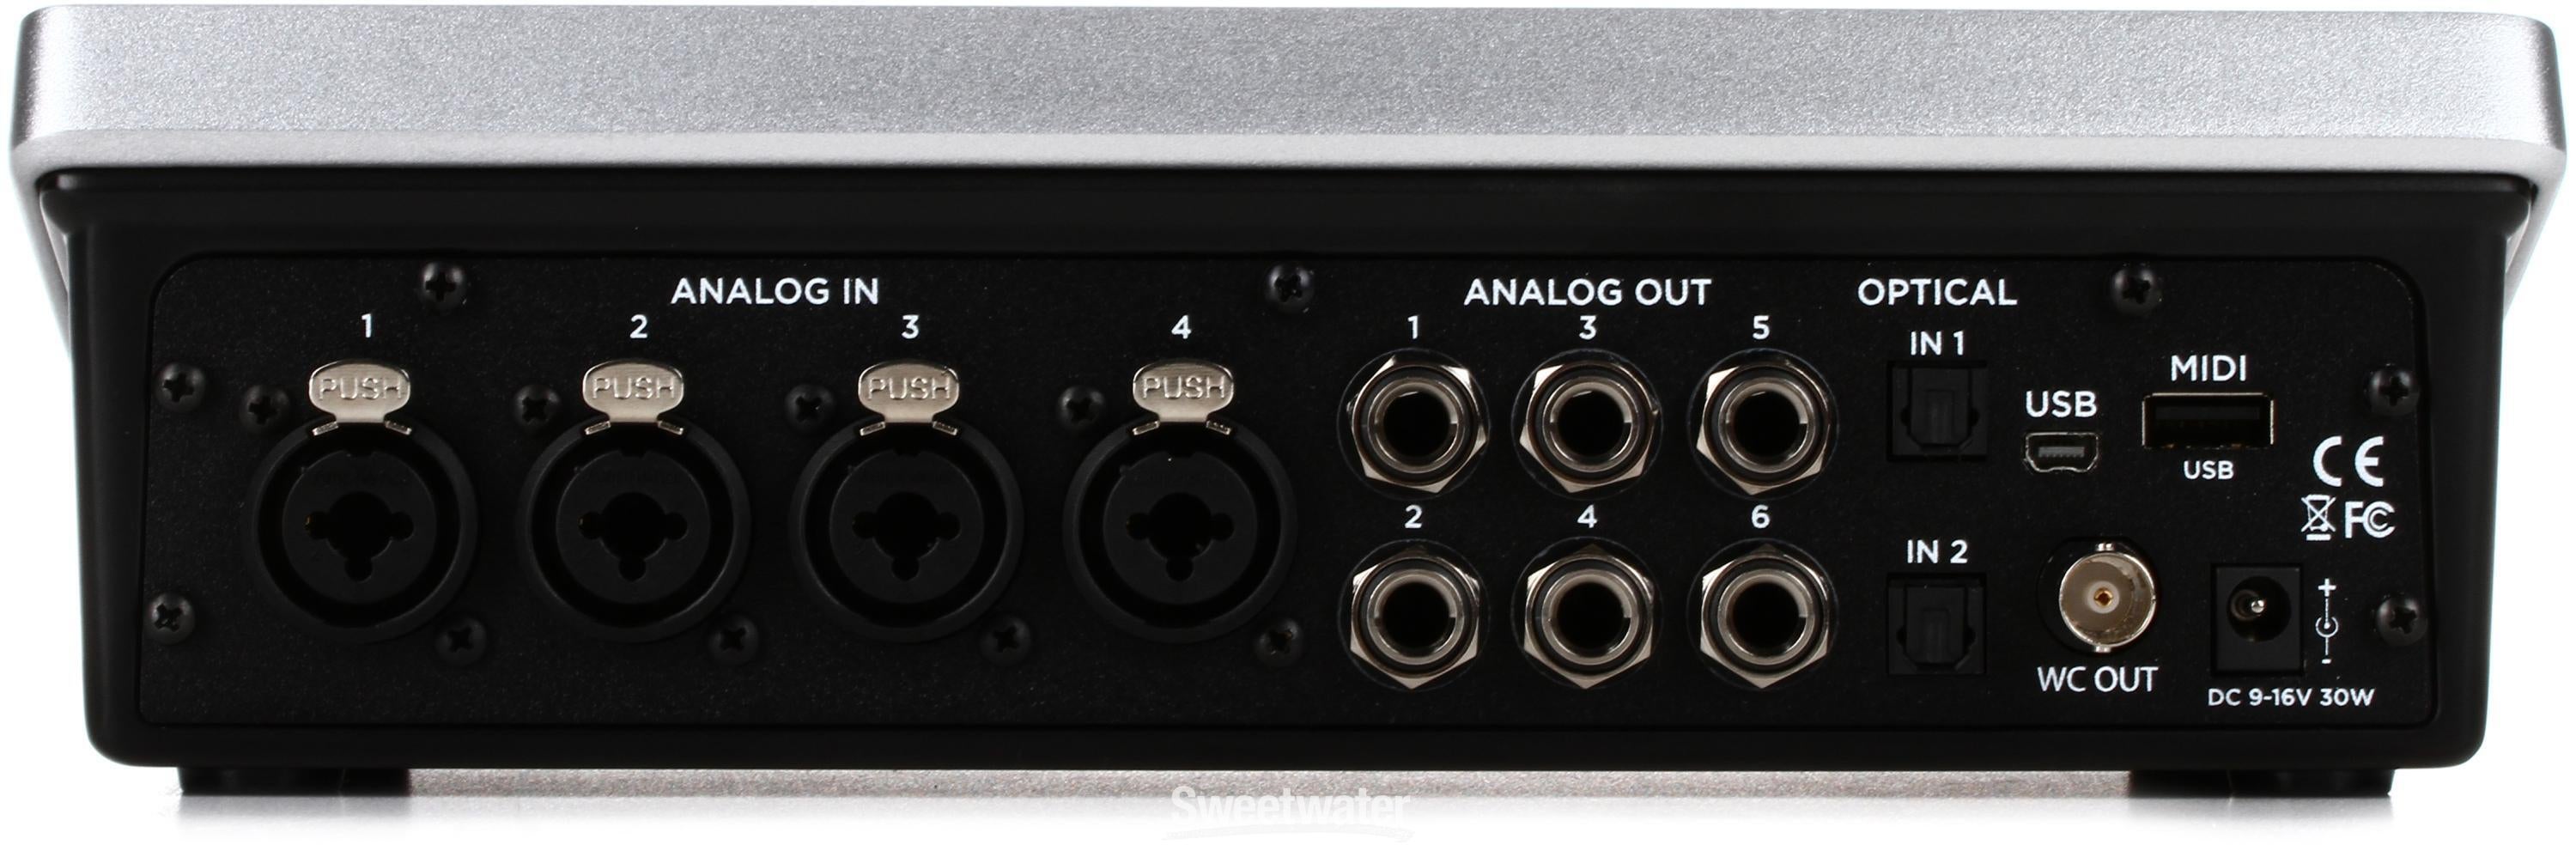 Apogee Quartet Desktop Audio Interface Reviews | Sweetwater